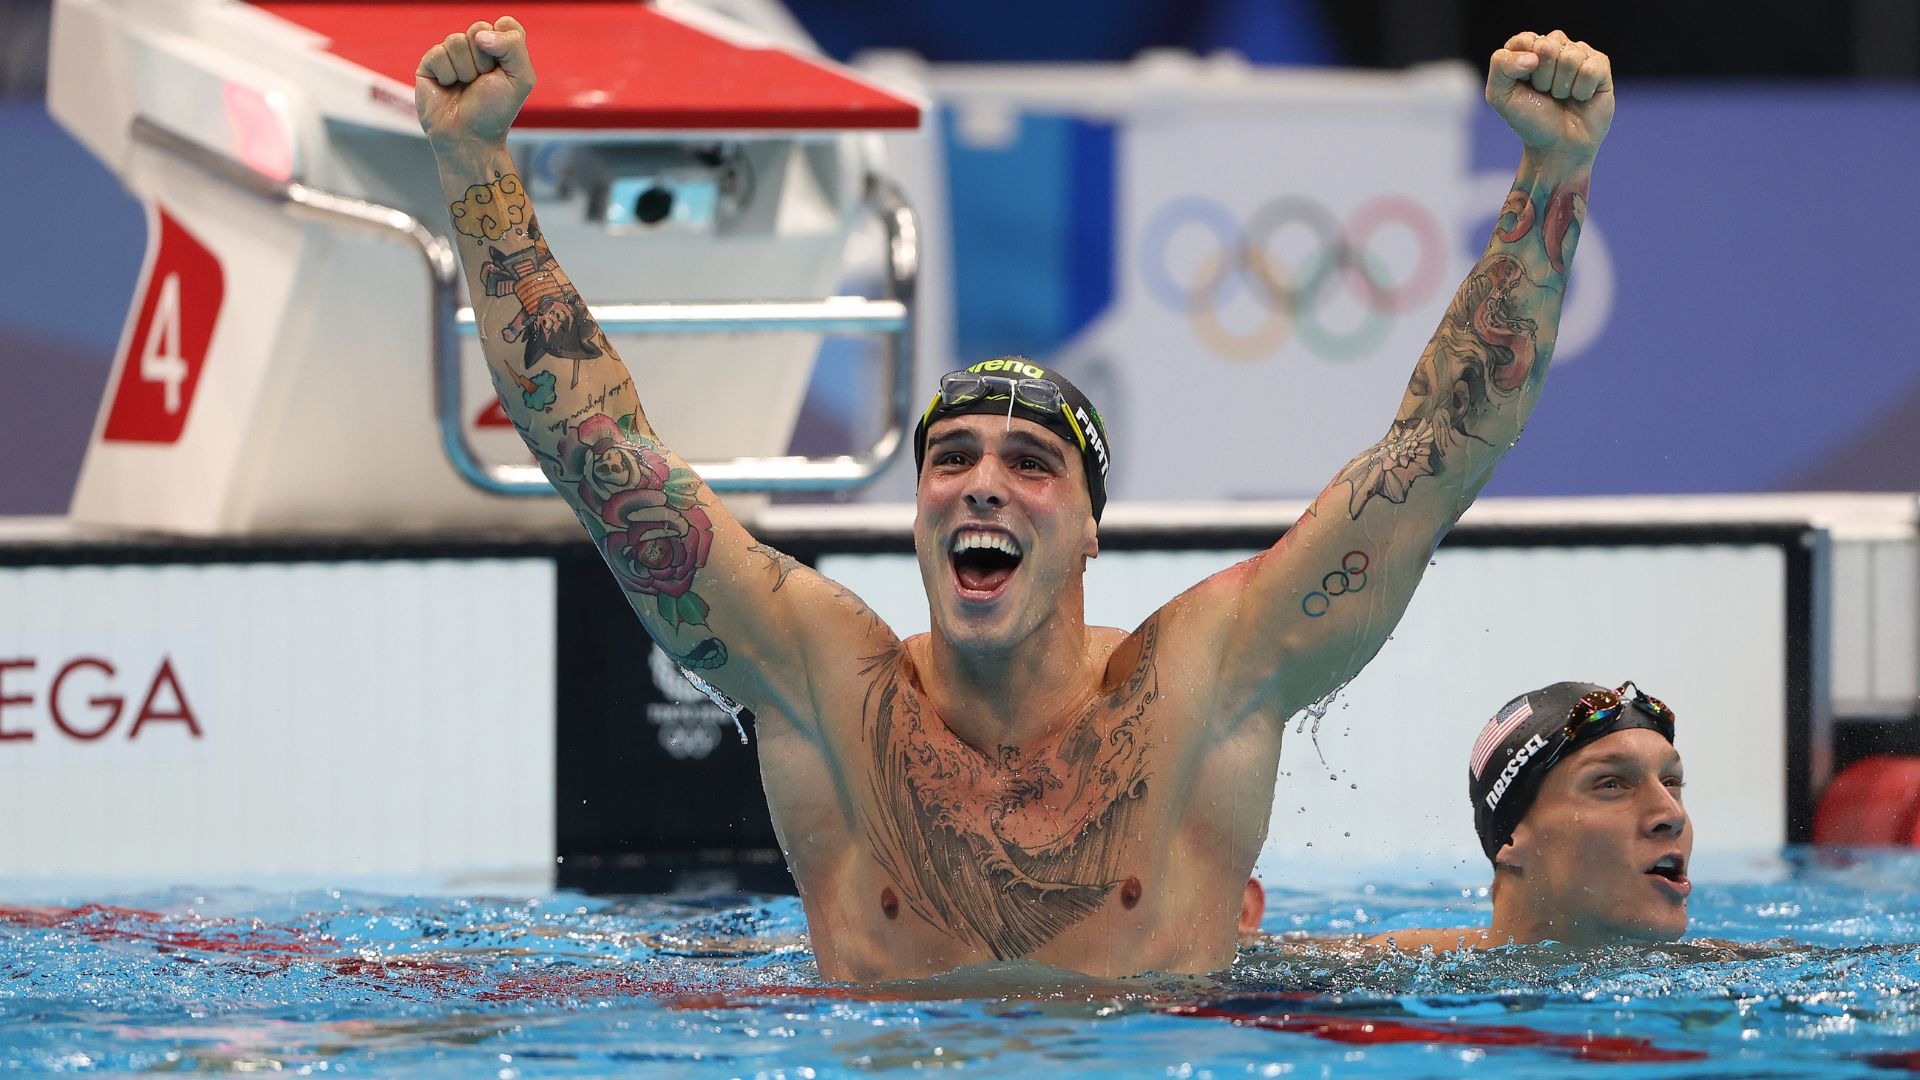 Bruno Fratus comemorando medalha de bronze na Olimpíada de Tóquio (Crédito: Getty Images)